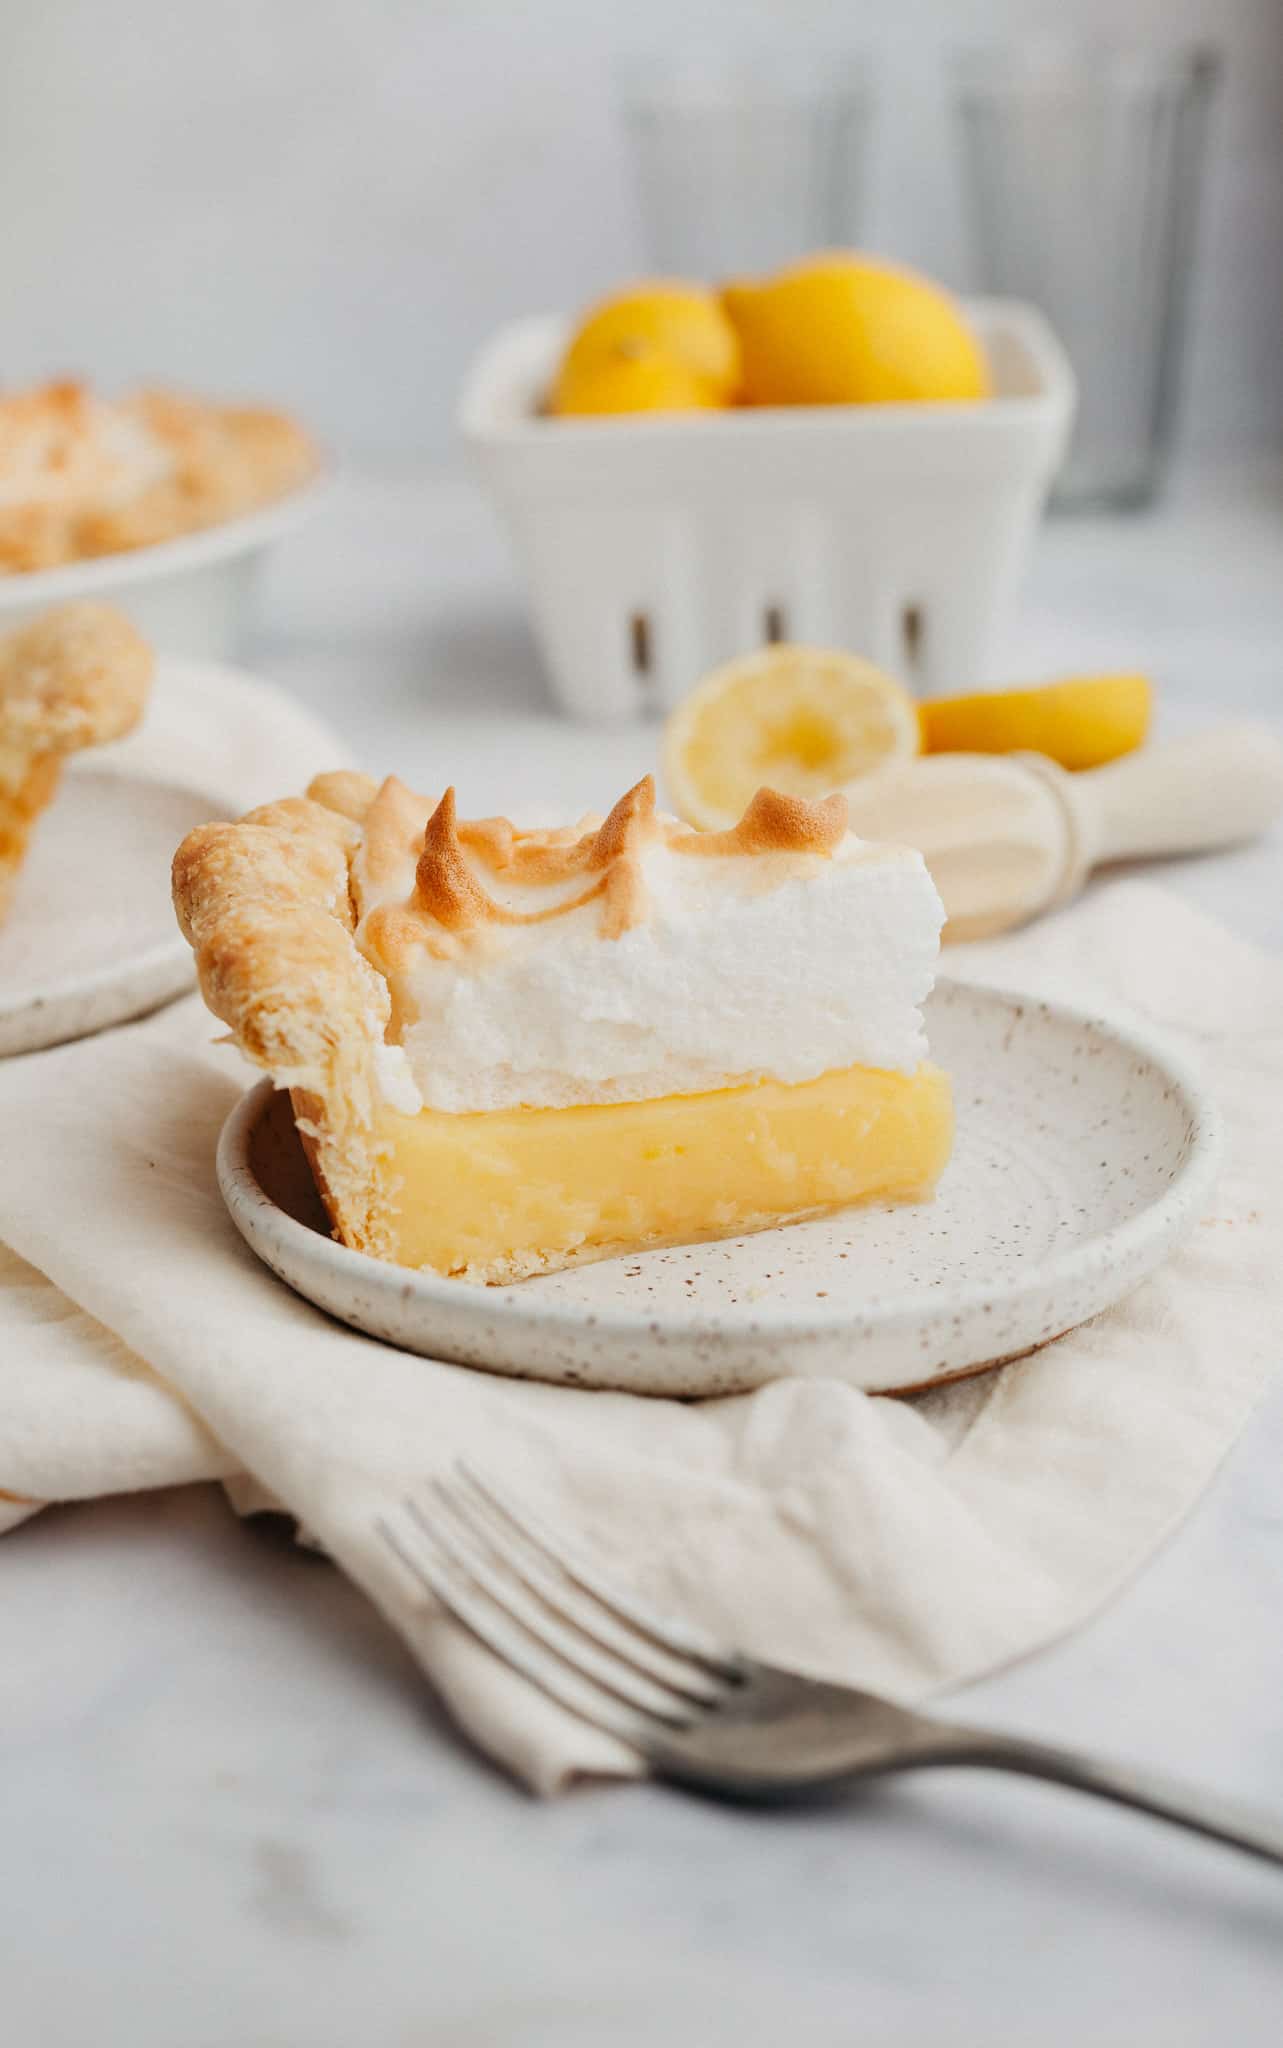 A slice of lemon meringue pie on a small white plate.